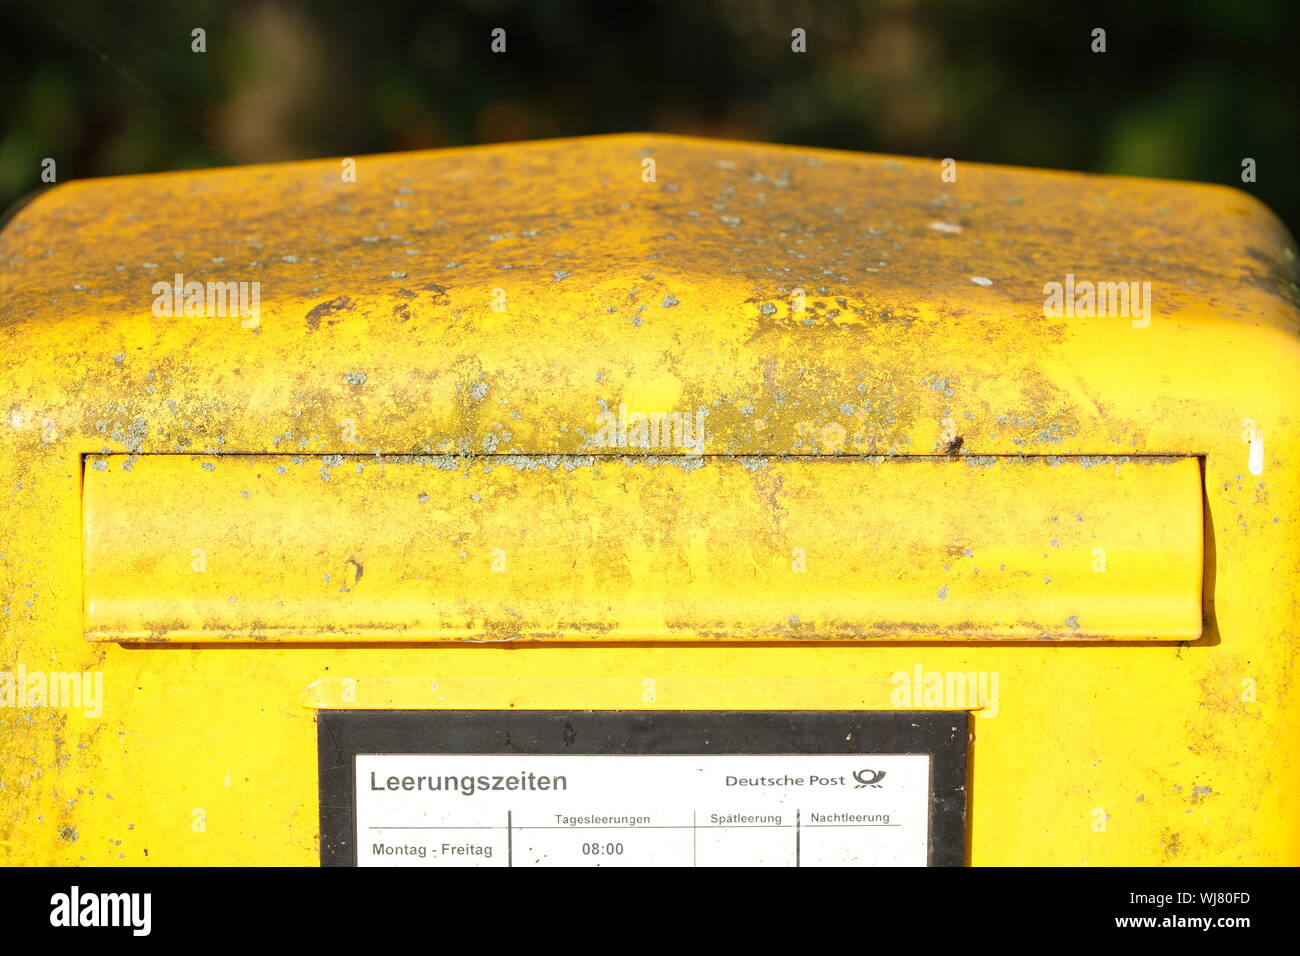 Briefkasten deutschland hi-res stock photography and images - Alamy